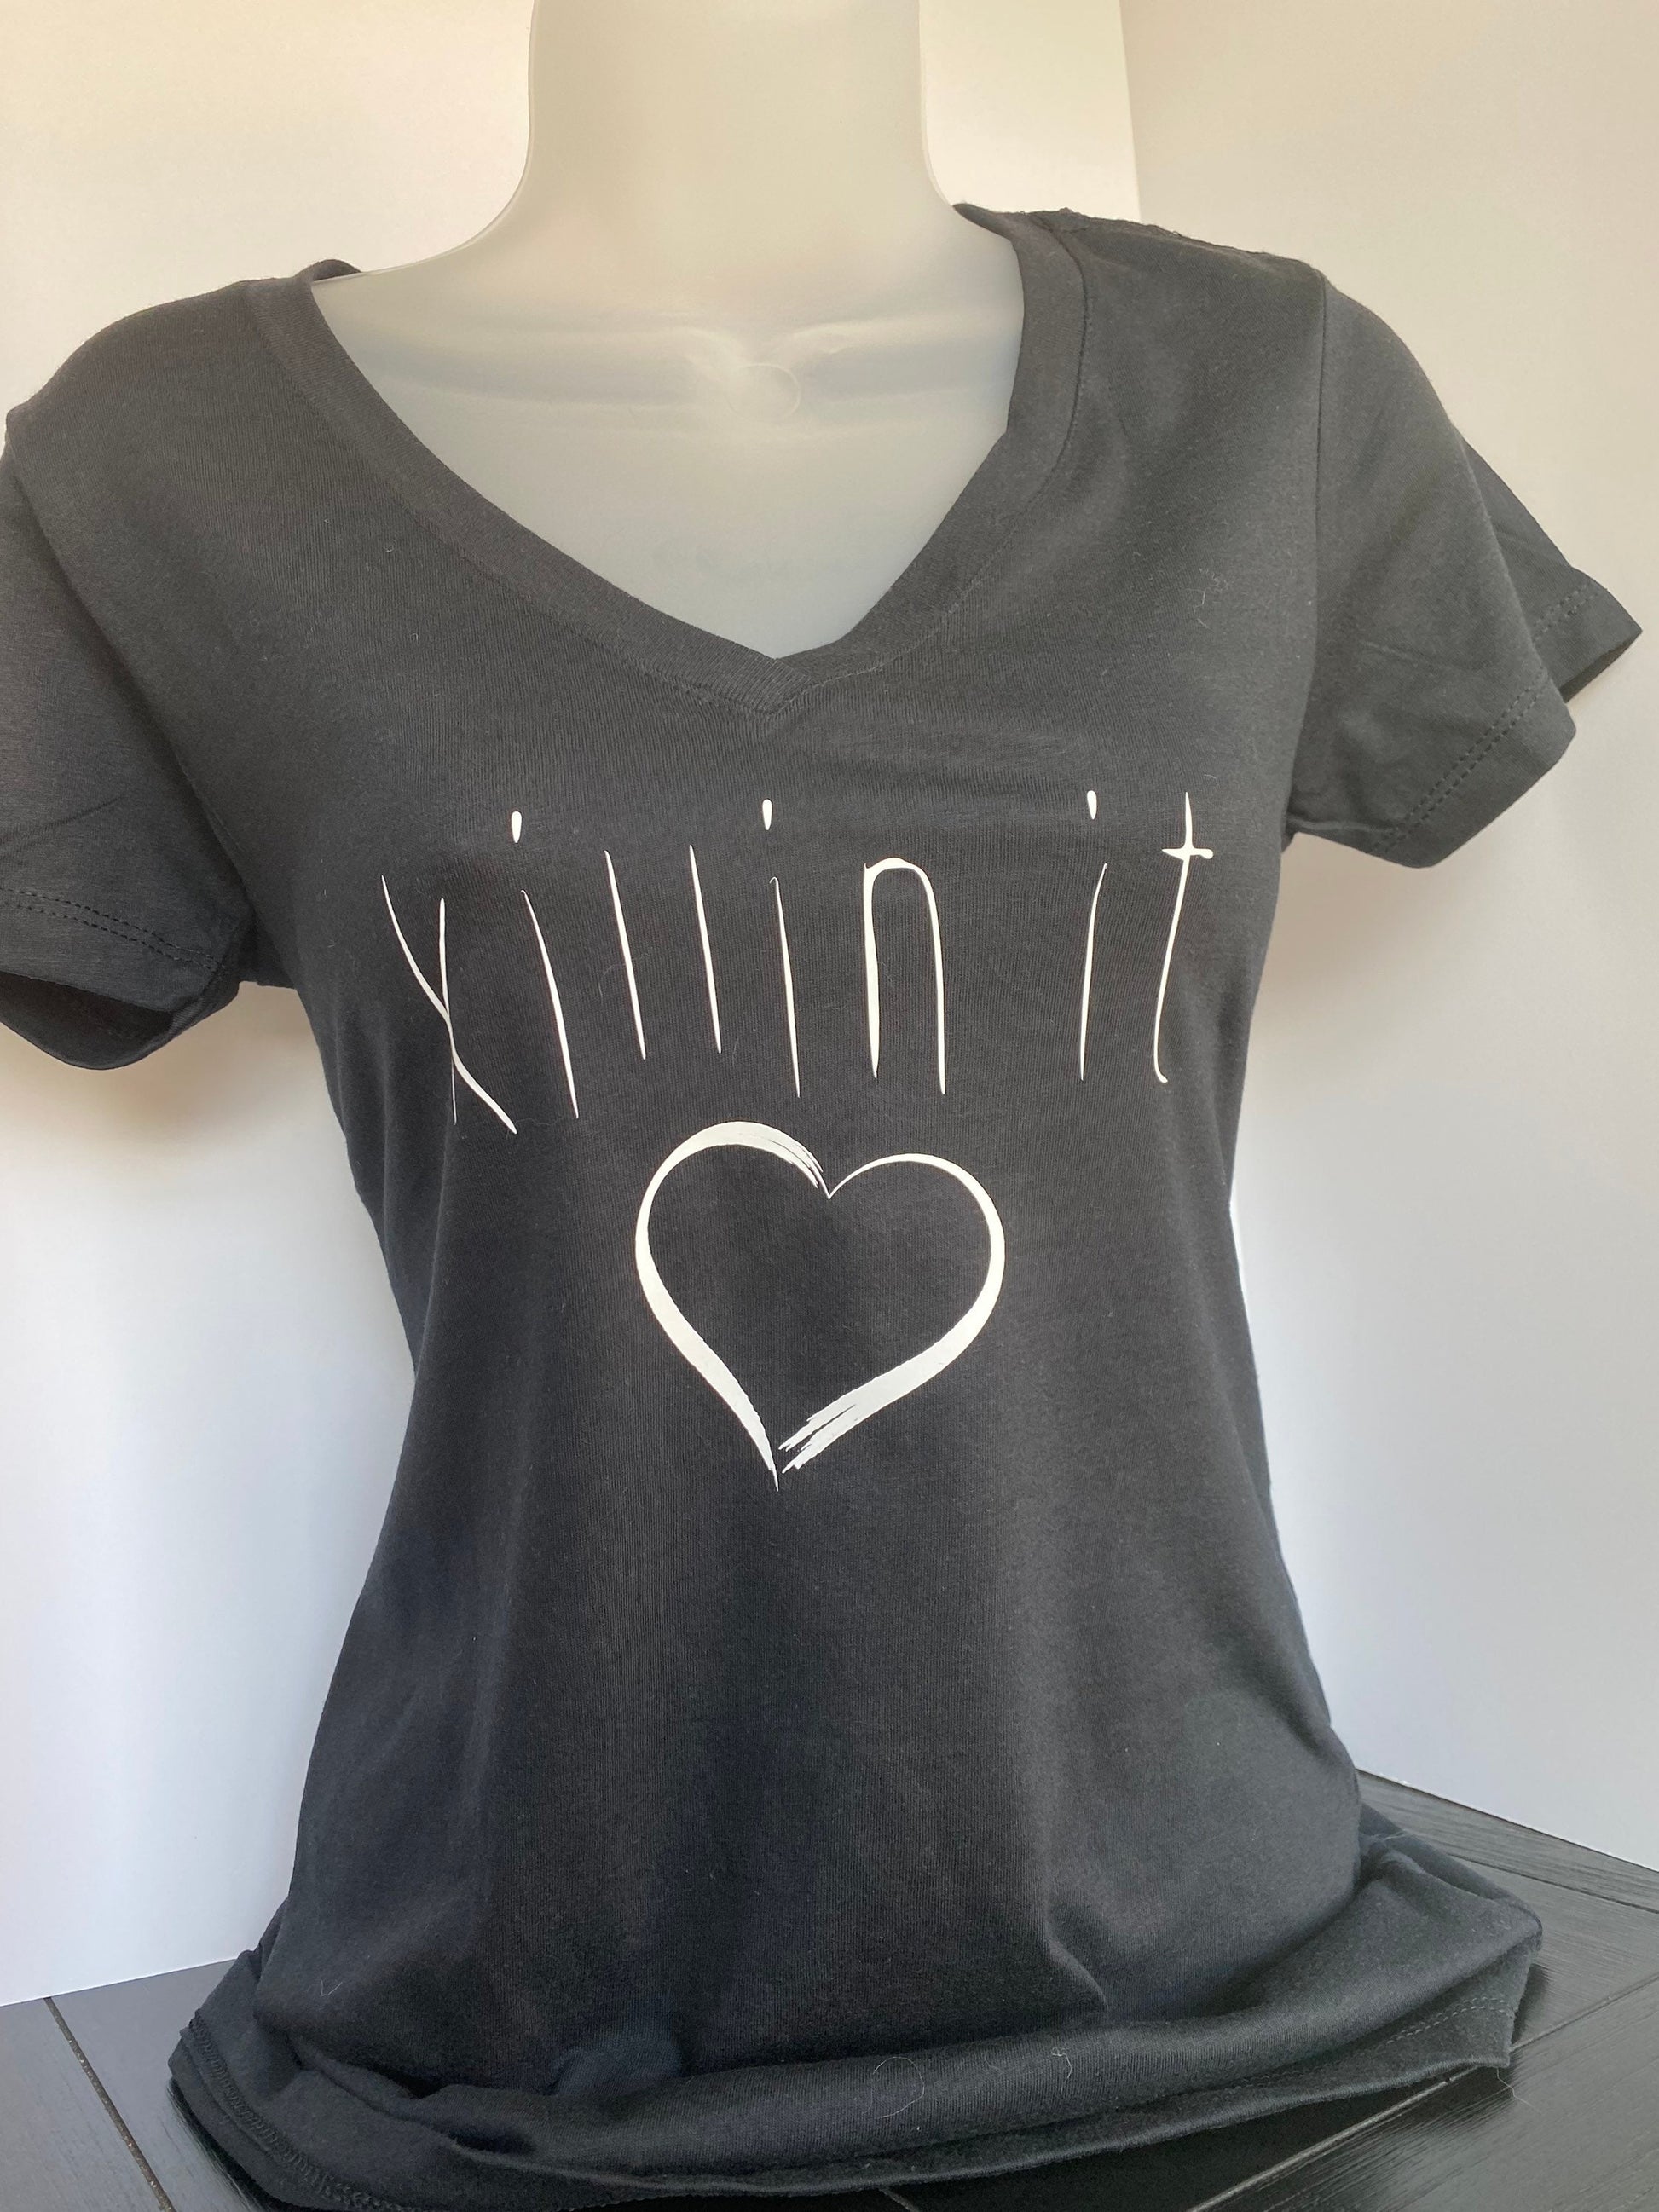 Killin it T-Shirt, Tank, Hoodie, or Tote, empowerment, inspirational message, motivational shirt